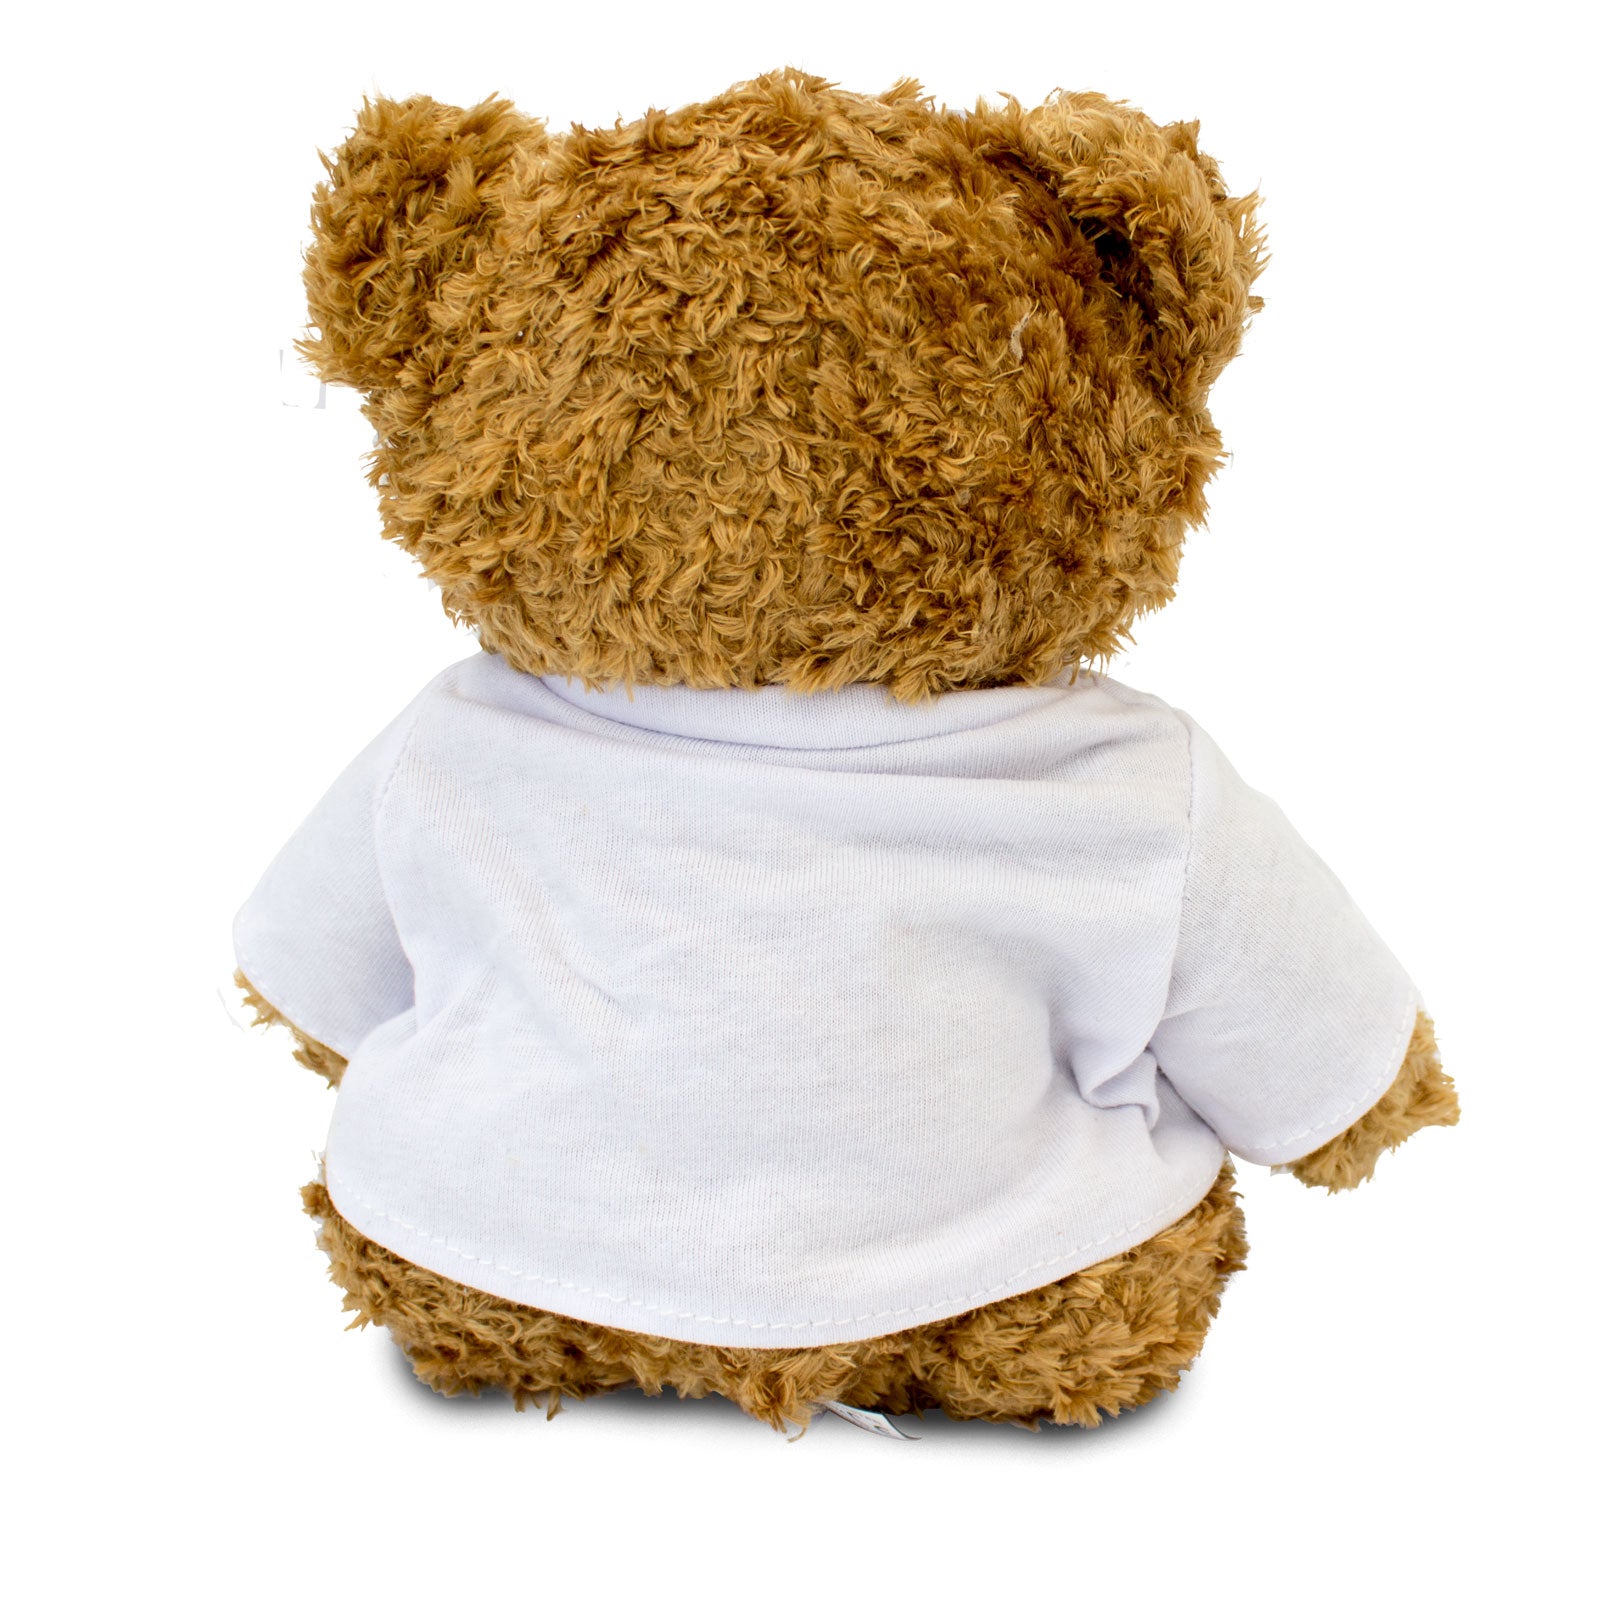 Get Well Soon Alfie - Teddy Bear